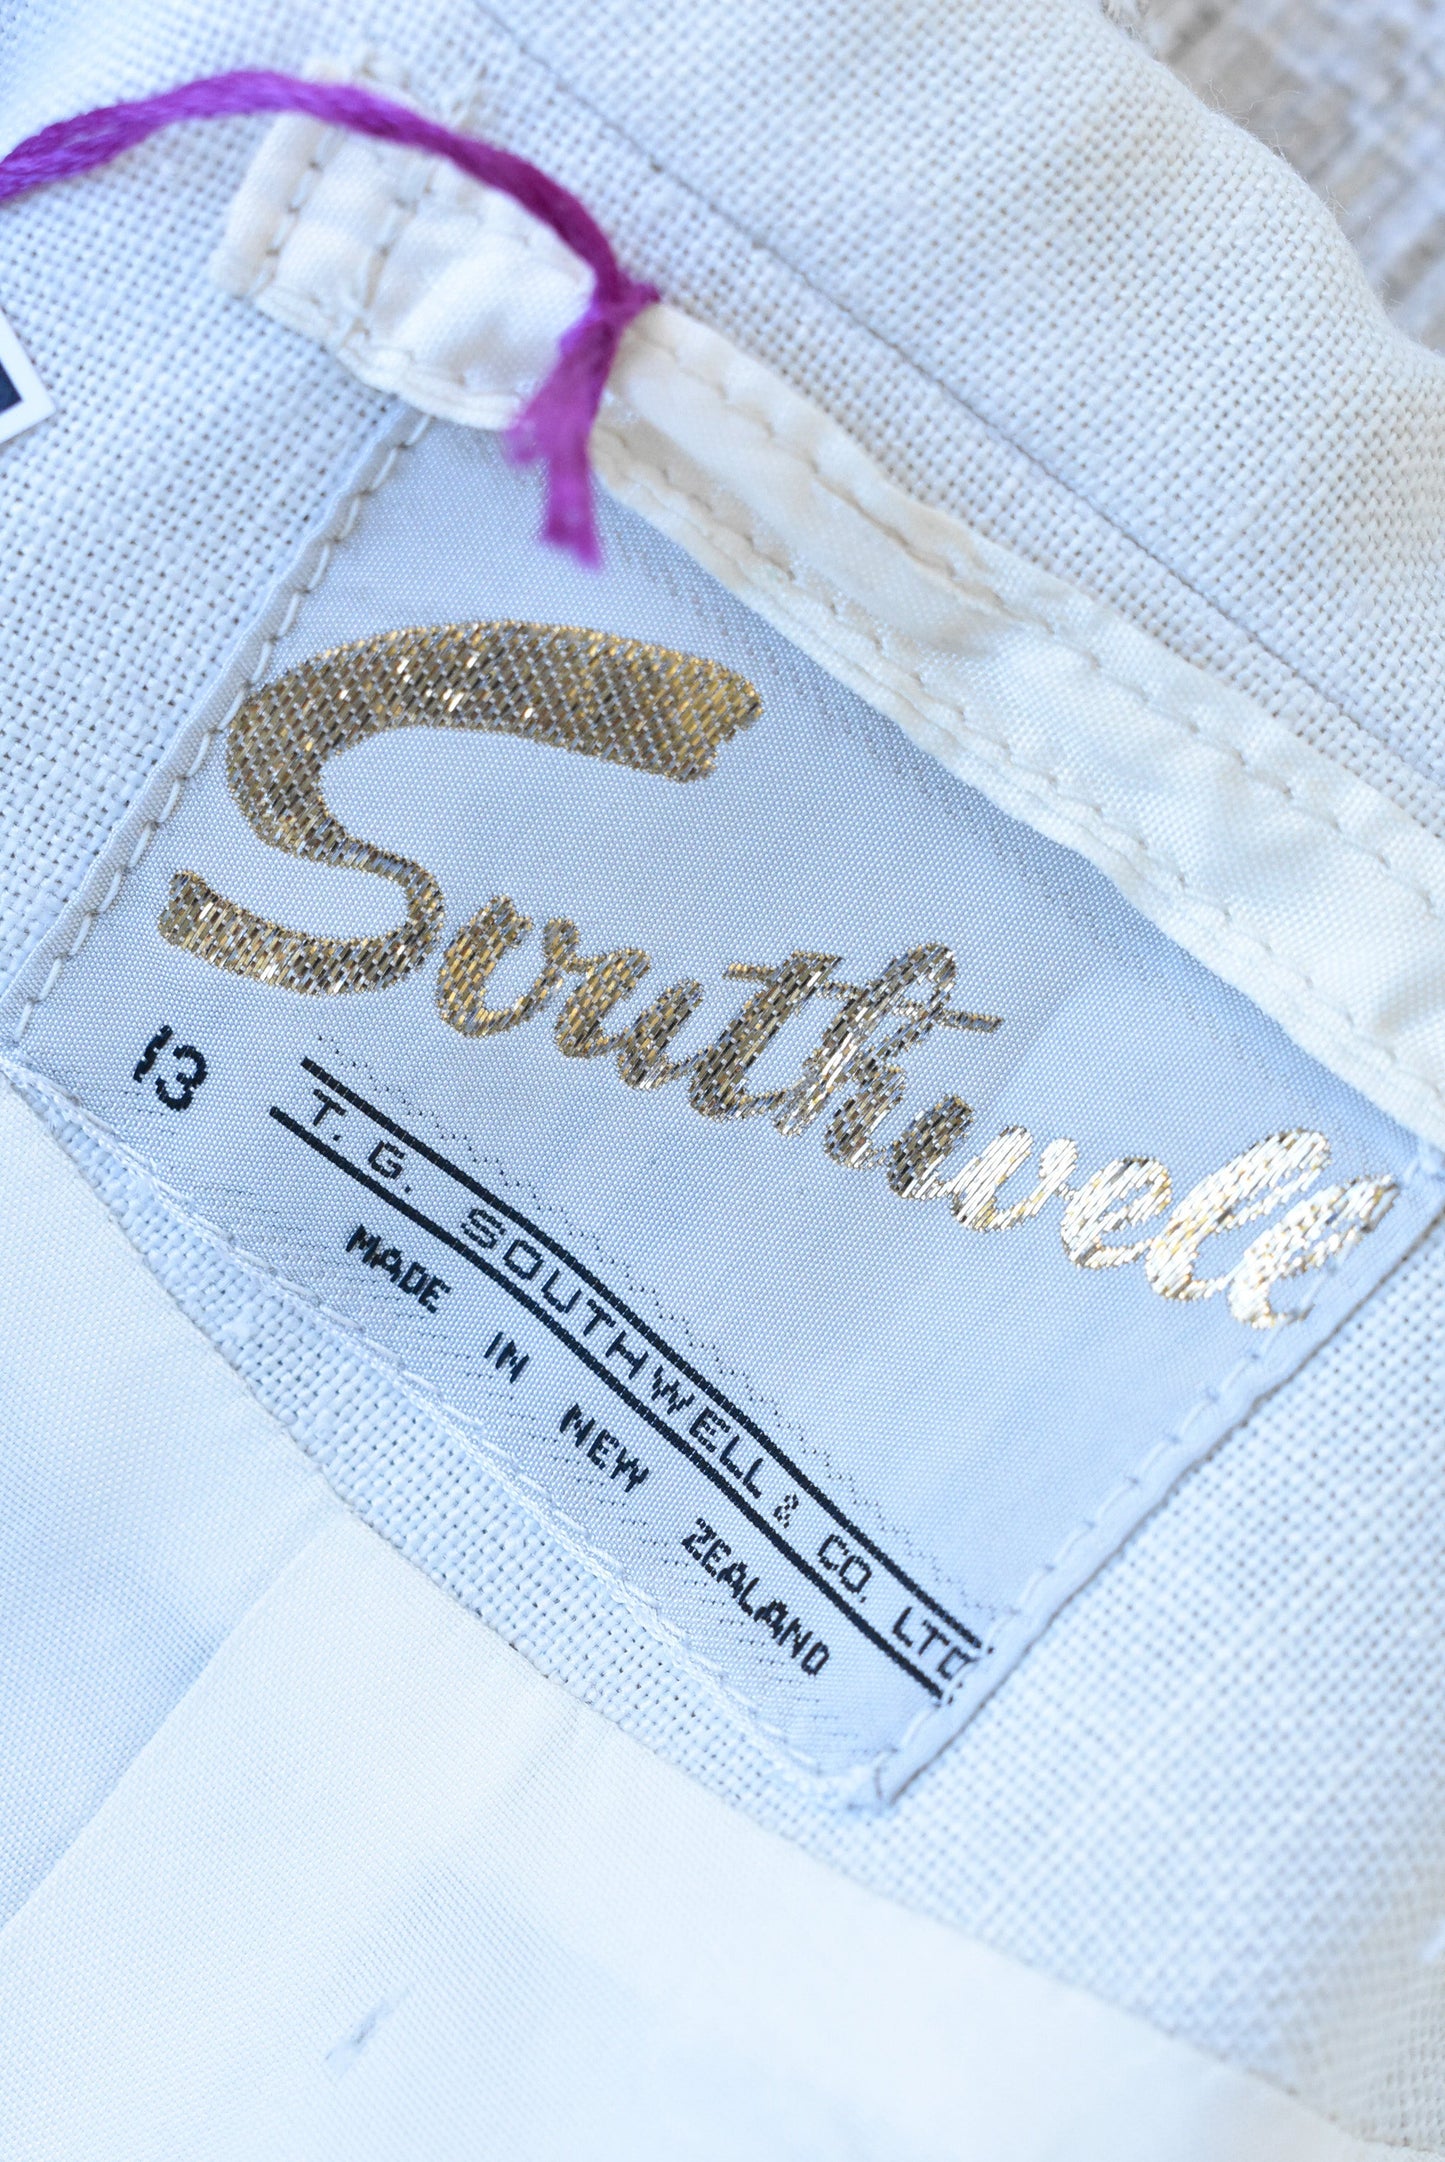 Southwell vintage blazer, 13